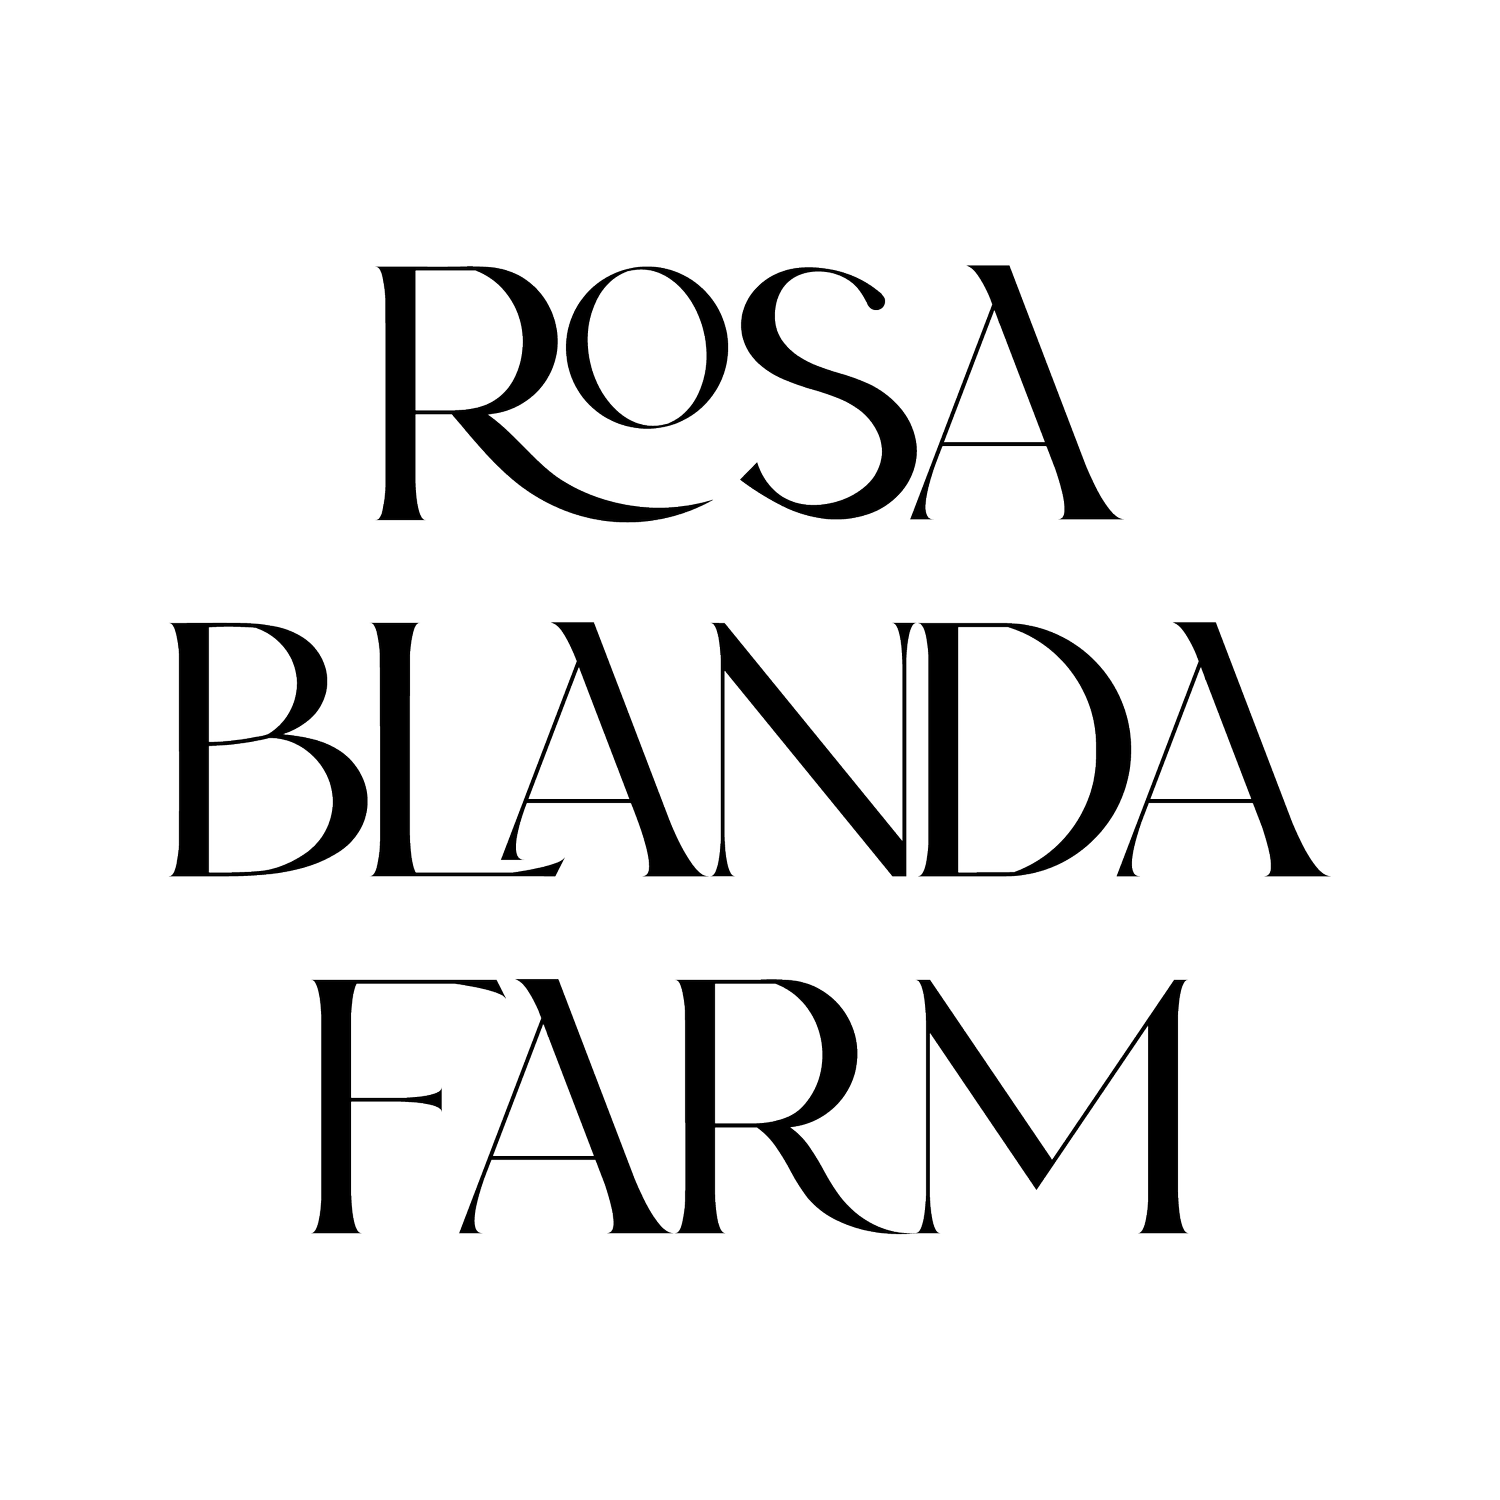 ROSA BLANDA FARM